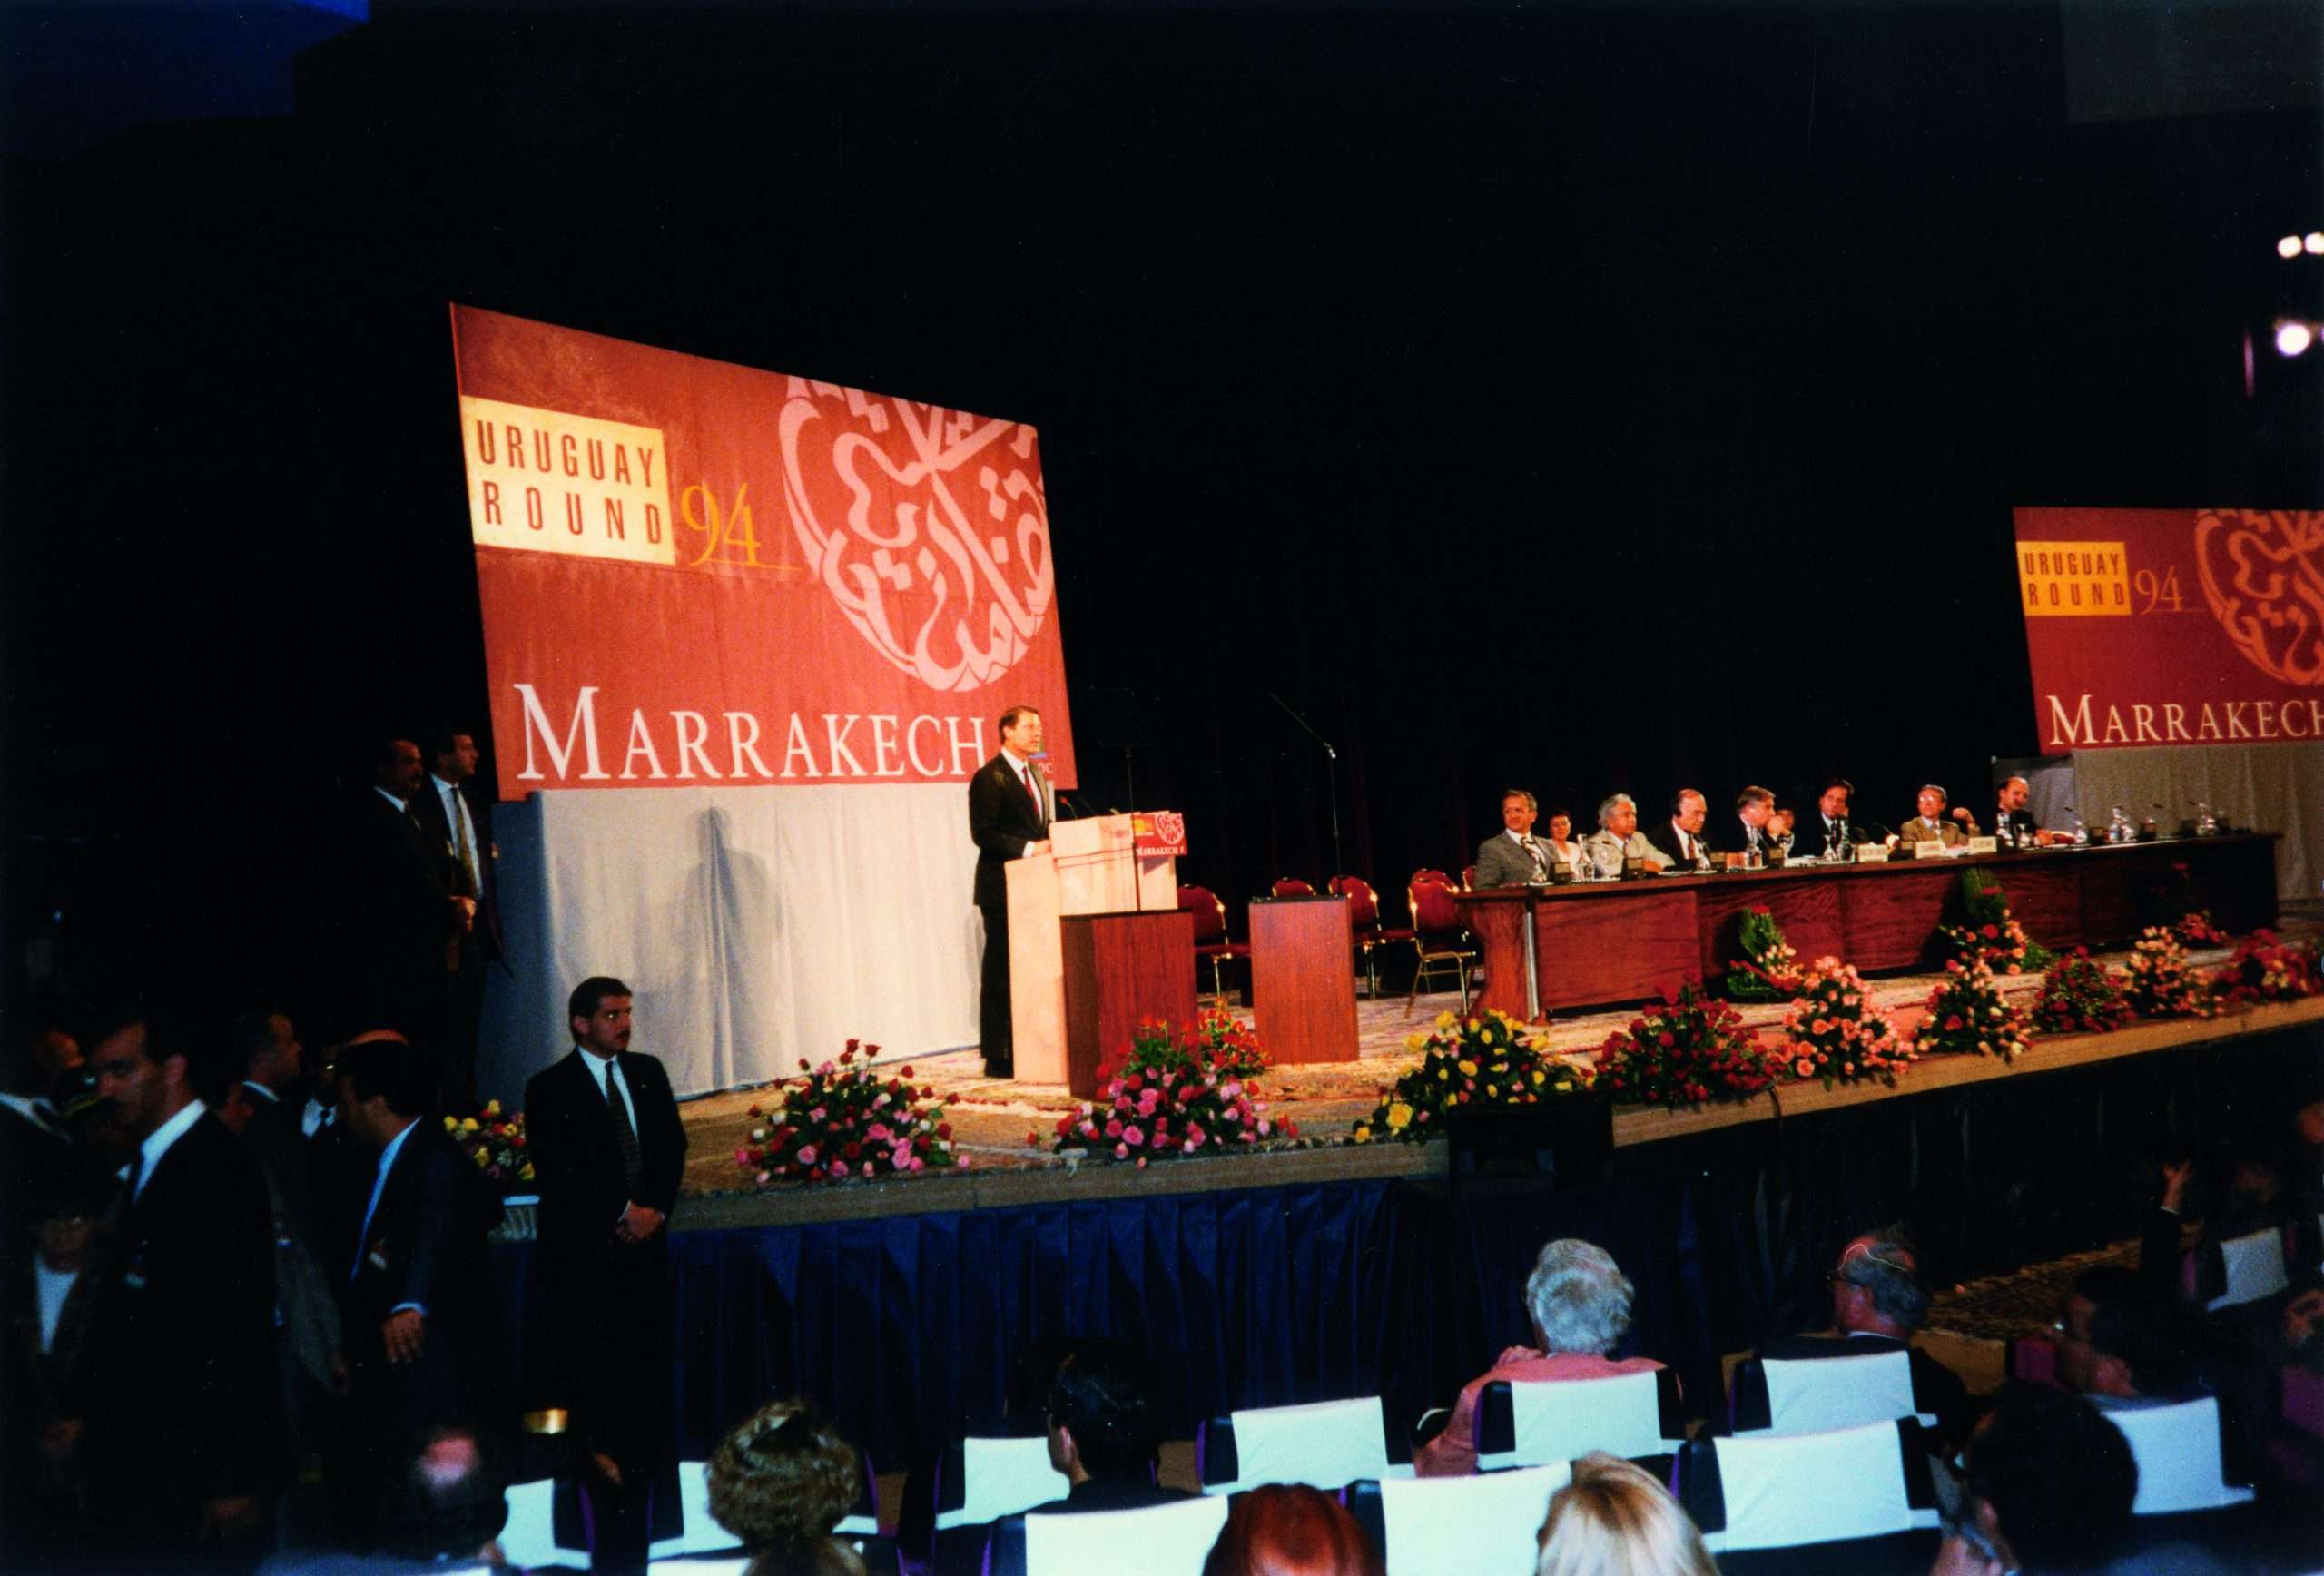 Conference organizer Marrakech